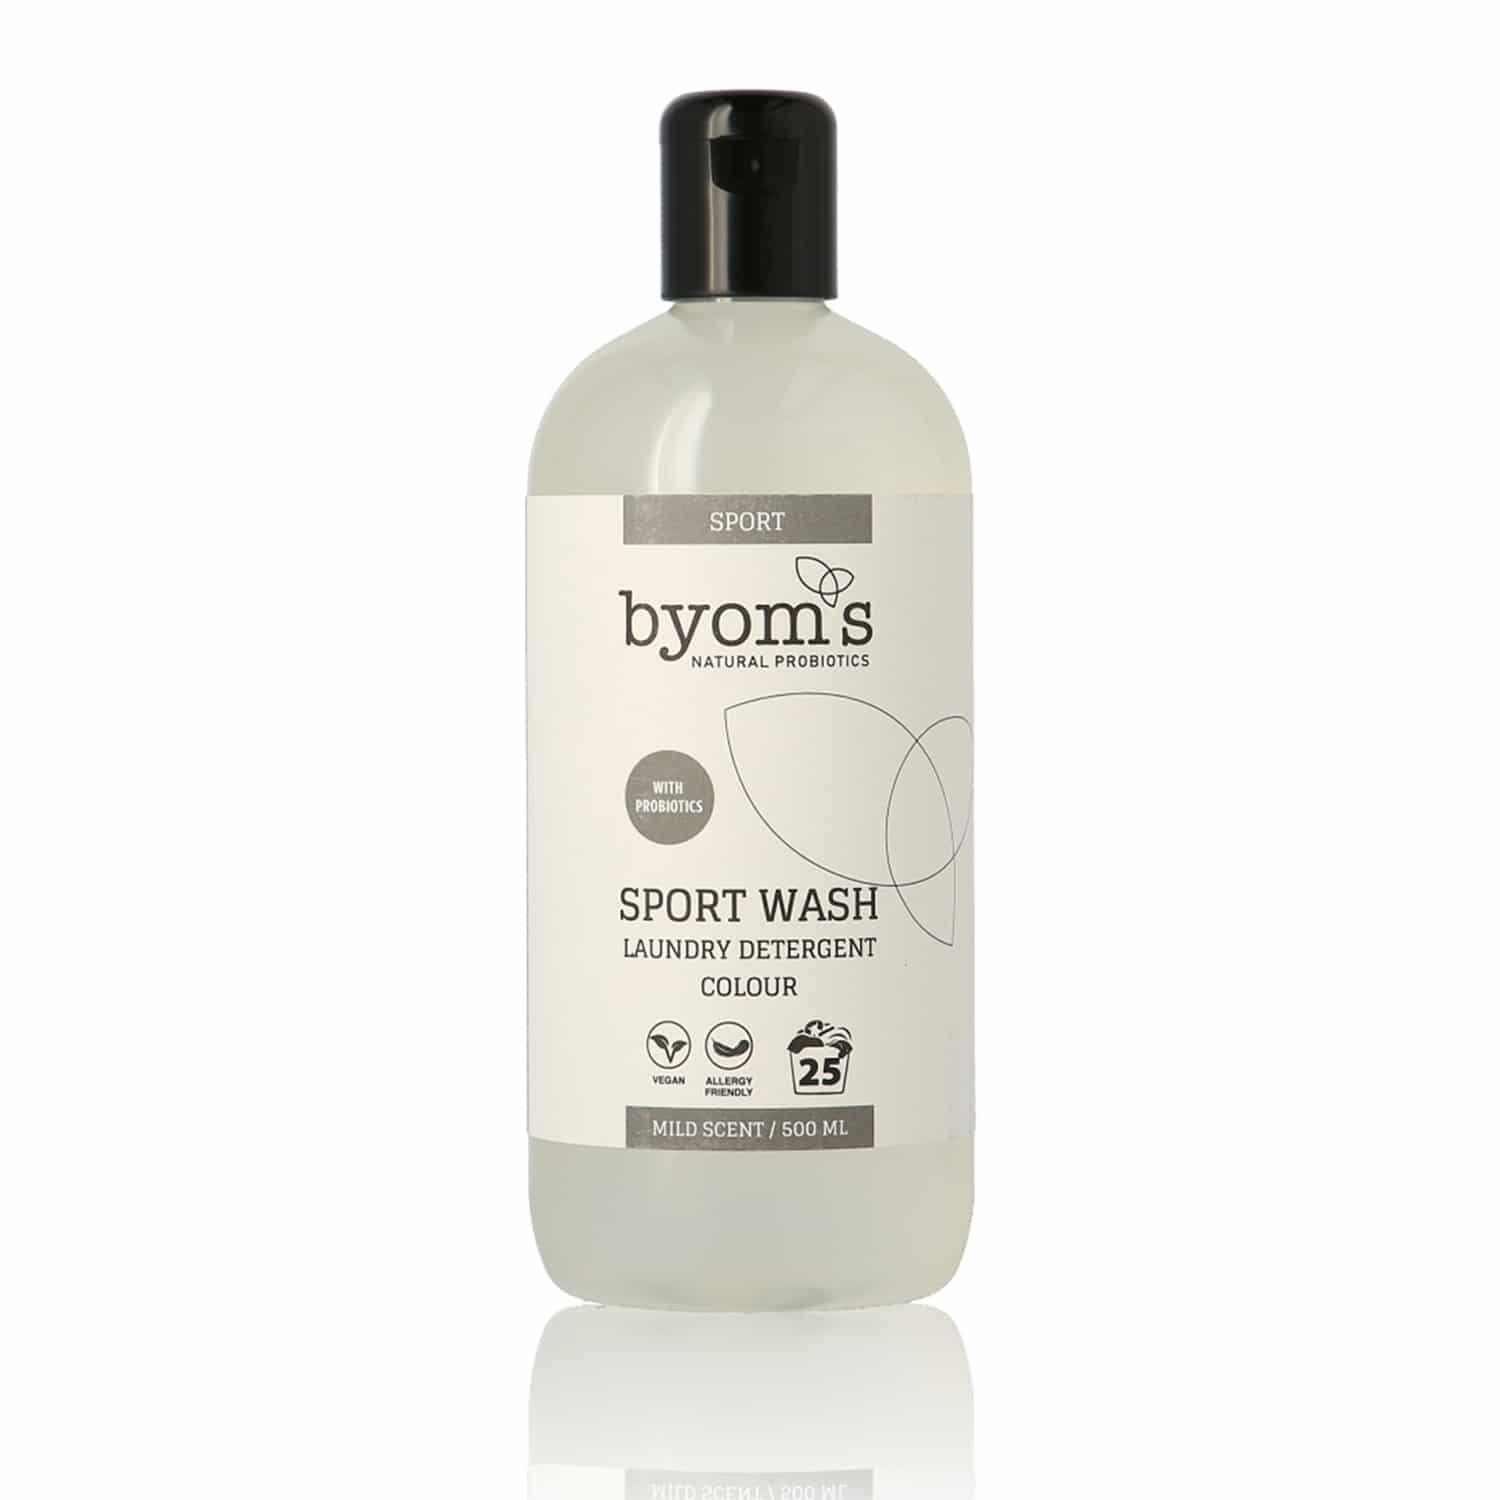 Se Byoms Sport Wash Probiotic Laundry Detergent Colour - 500 ml. hos Duft og Natur